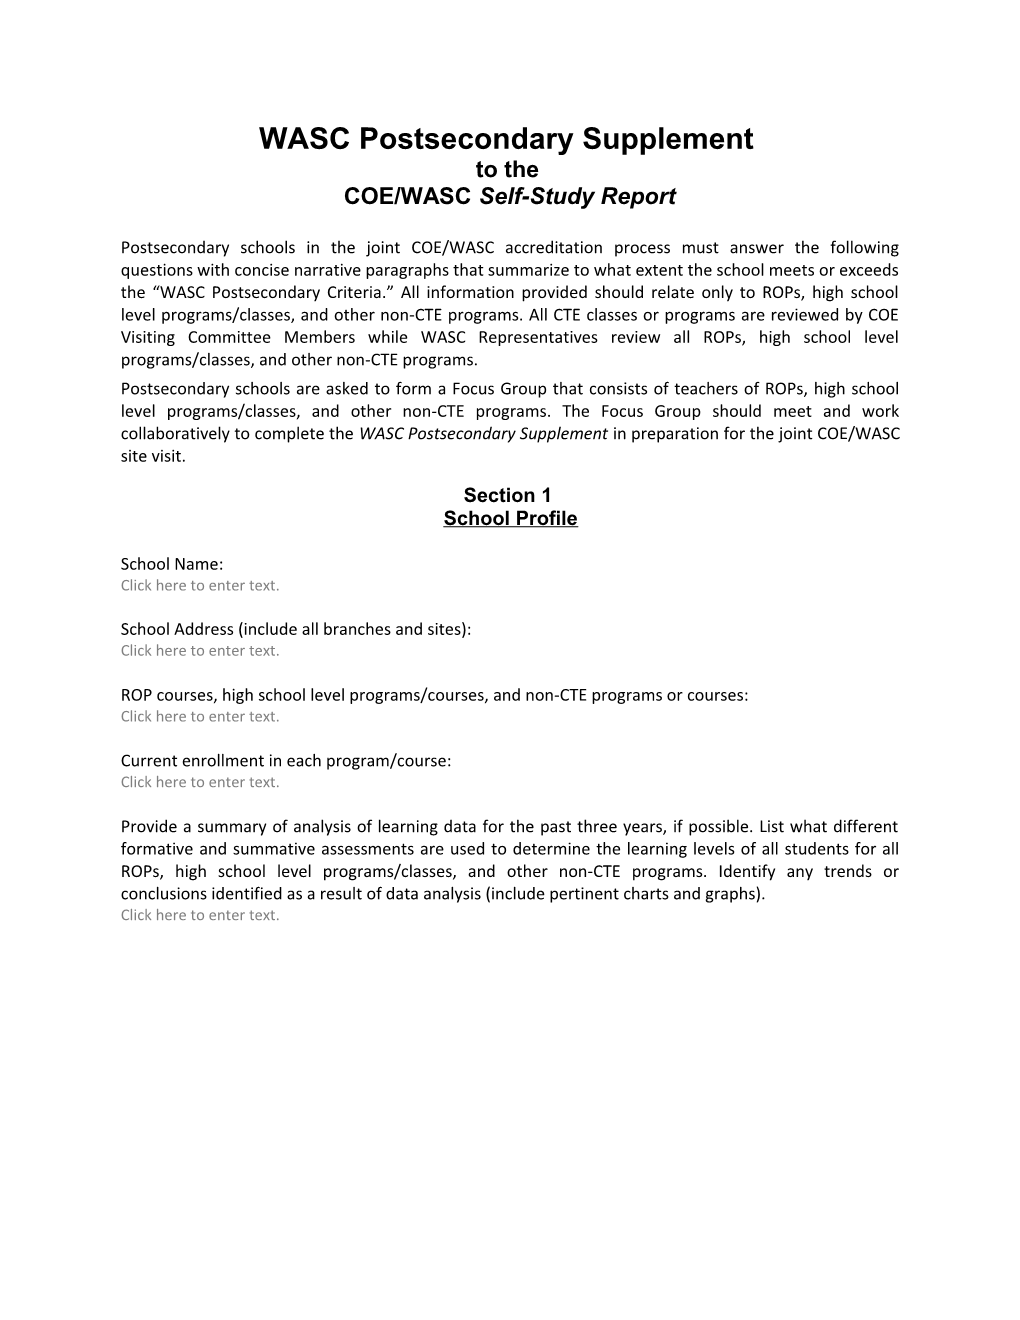 COE/WASC Self-Study Report